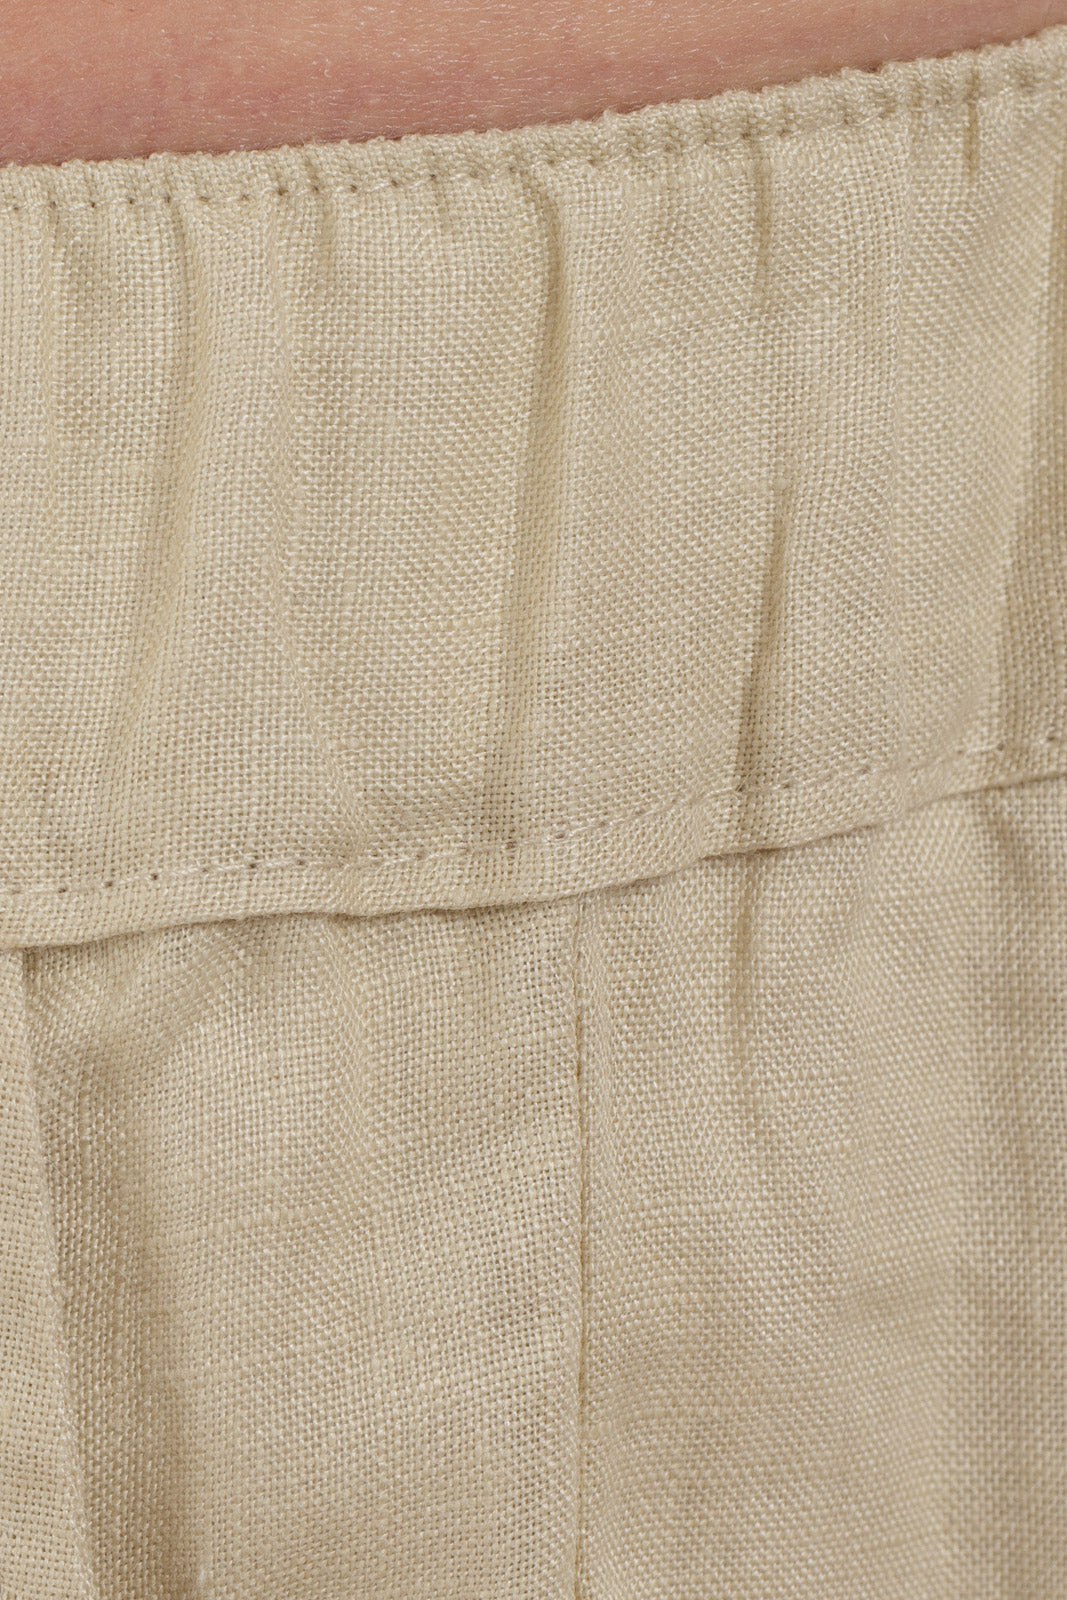 Plain Linen Shorts Bermuda